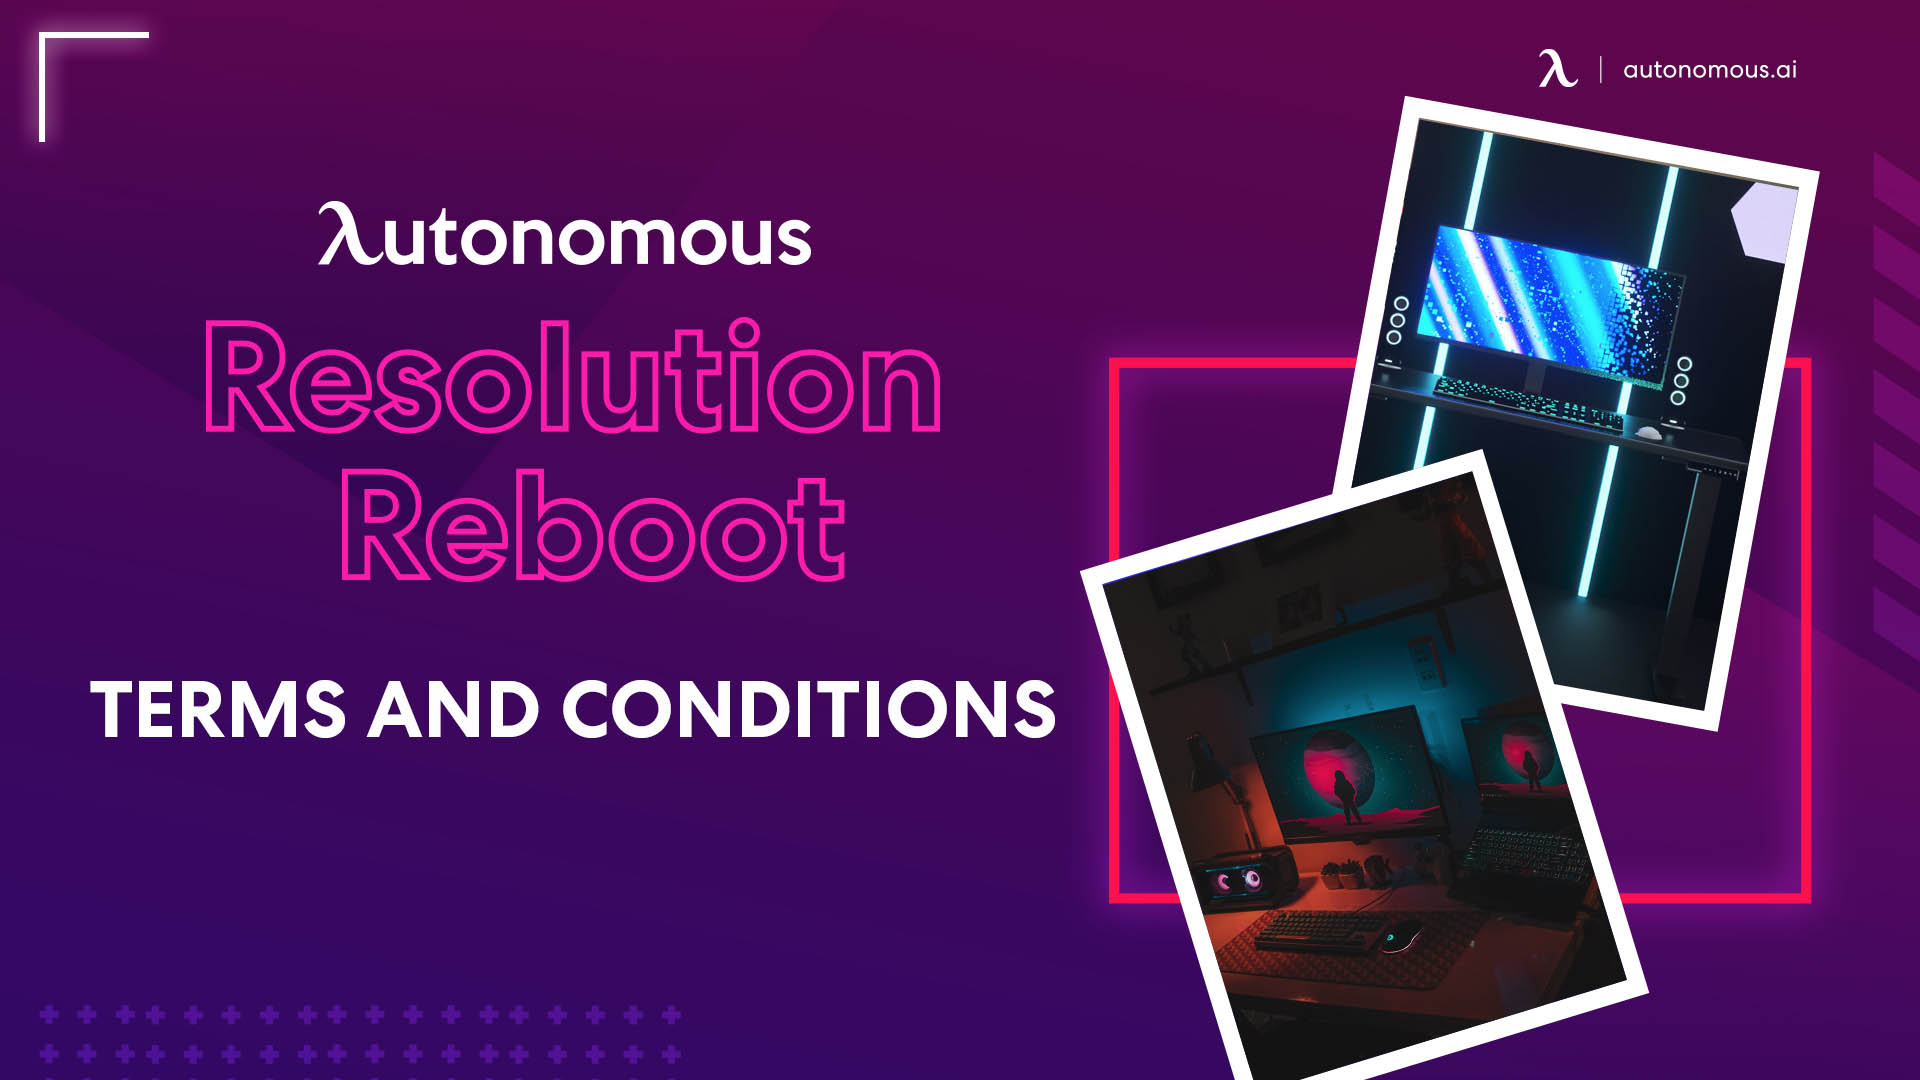 Autonomous Photo Contest Terms and Conditions